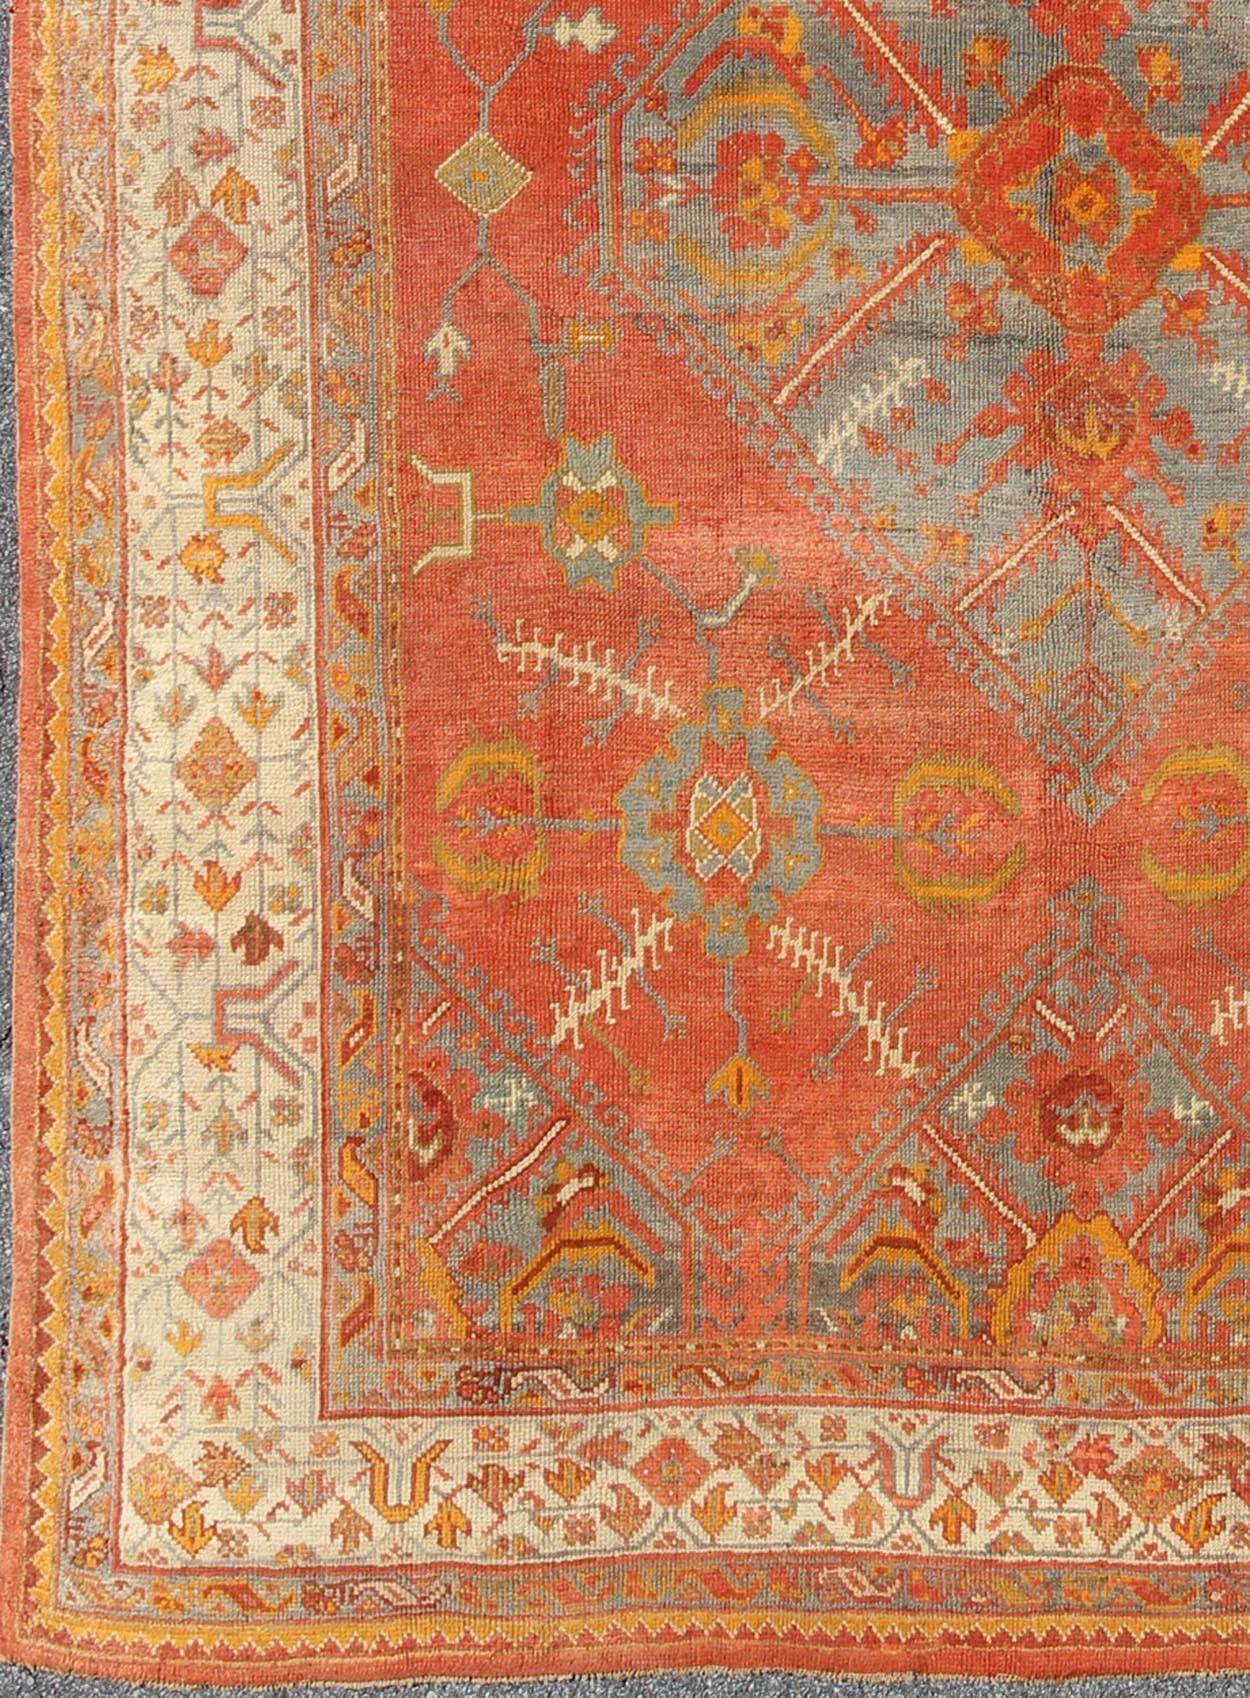 Antique Turkish Oushak rug with tribal Medallion design in terracotta, light gray blue, ivory and gold. Keivan Woven Arts /  rug 16-0911, country of origin / type: Turkey / Oushak, circa 1900
Measures: 10' x 13'8.
This antique Turkish Oushak carpet